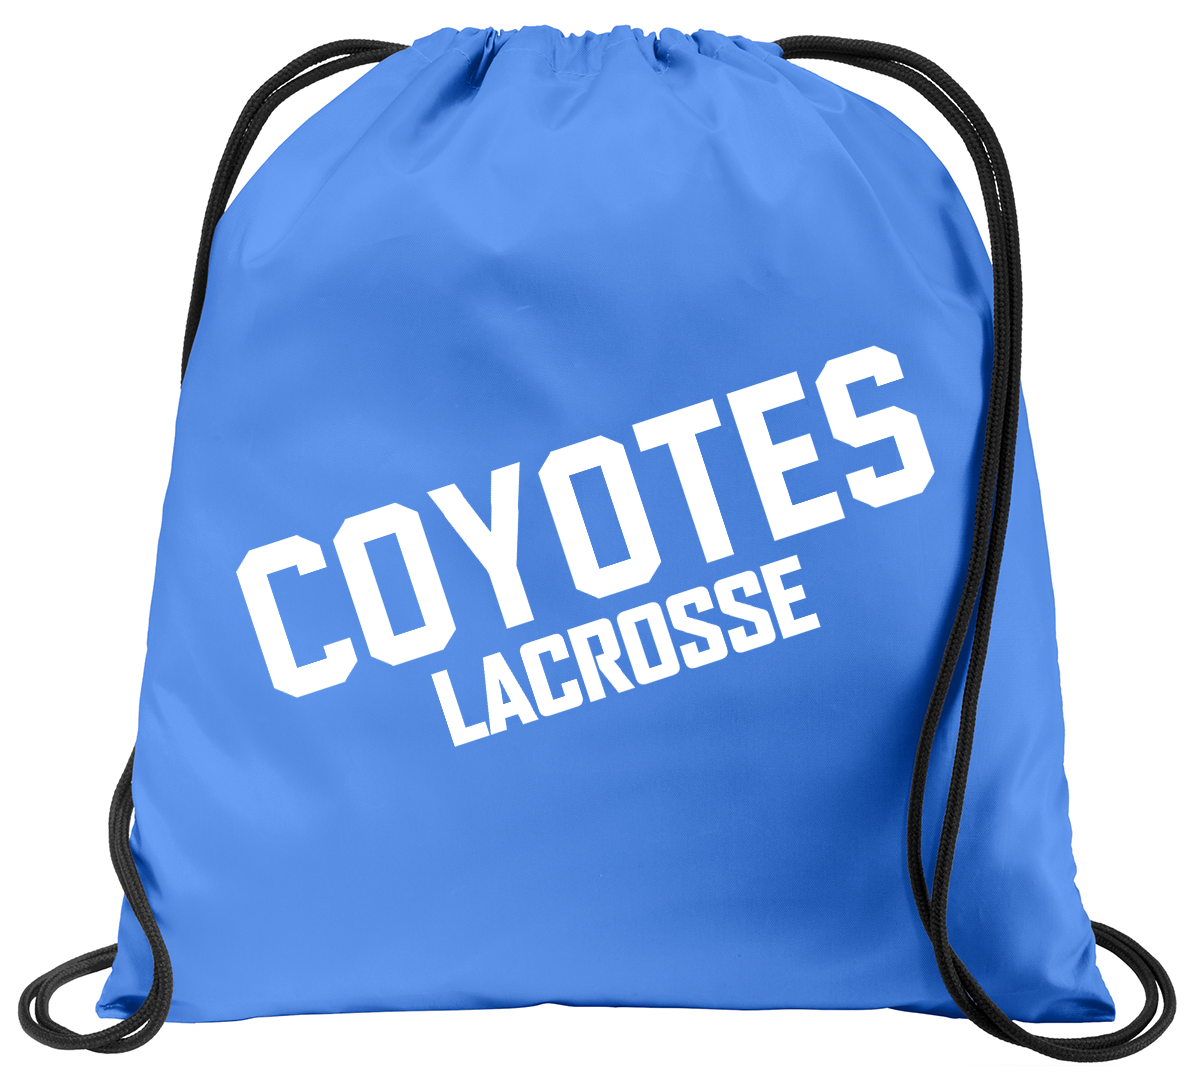 Coyotes Lacrosse Carolina Blue Cinch Pack